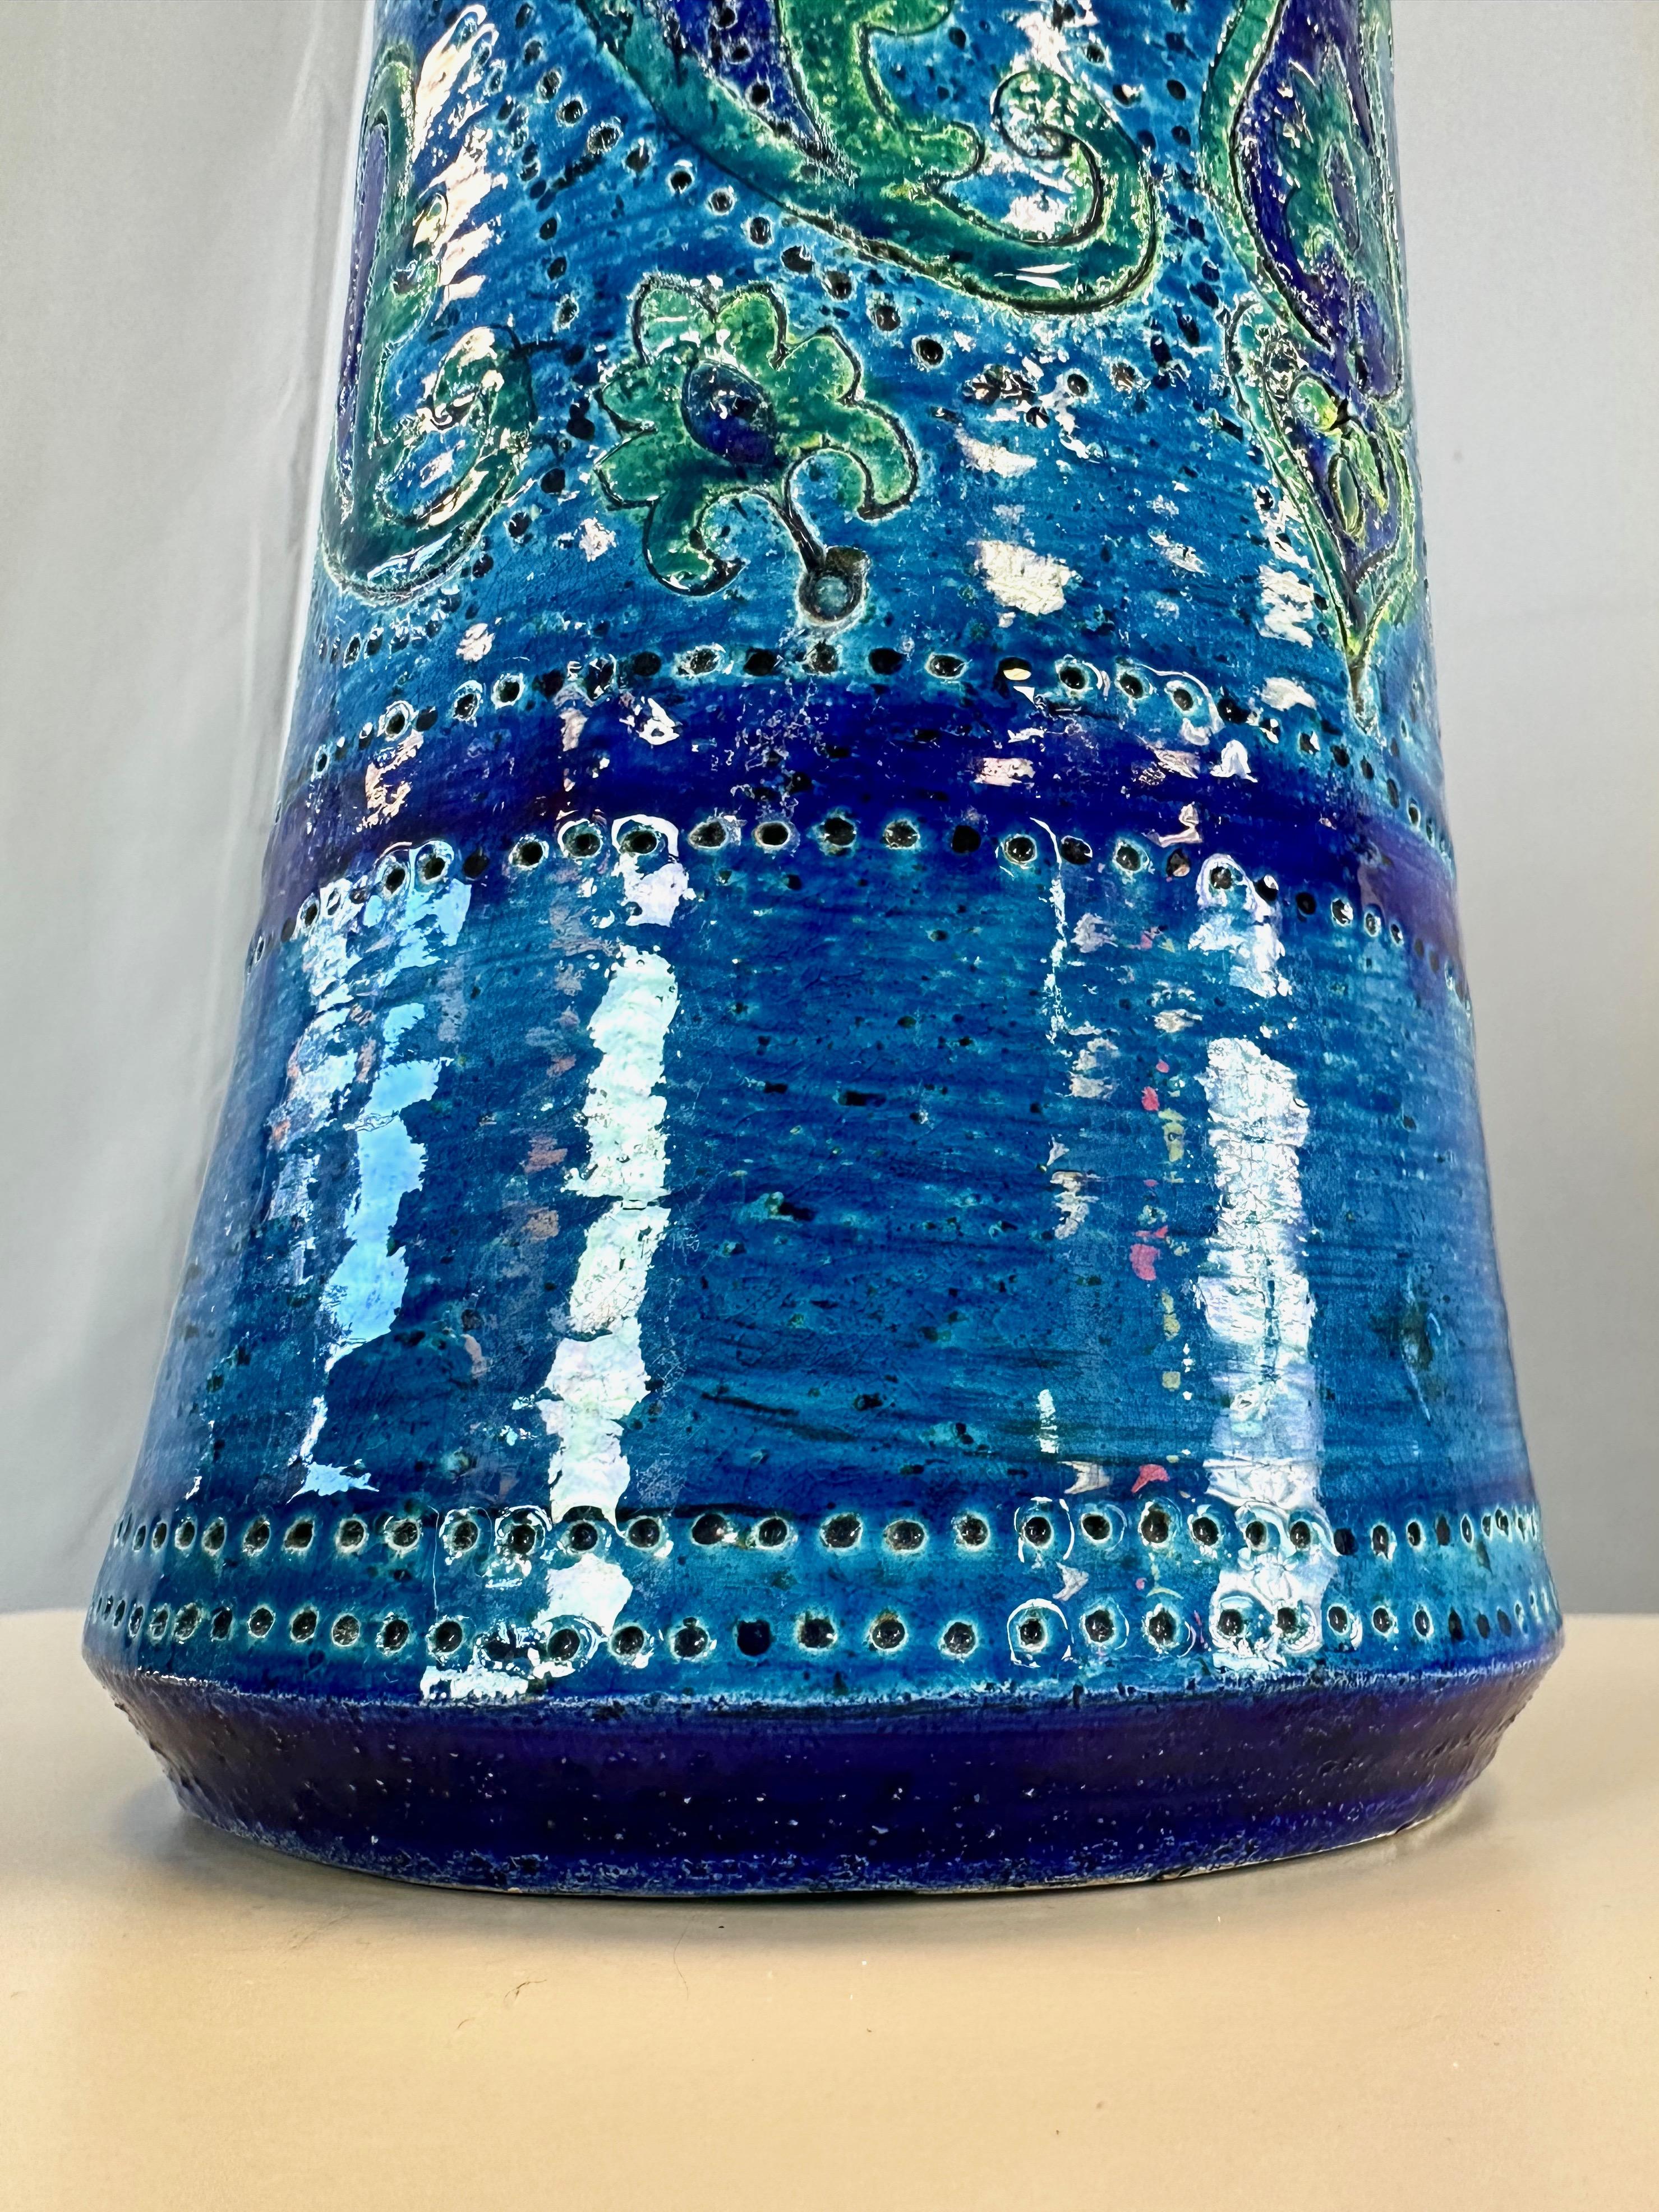 Aldo Londi for Bitossi Rimini Blue Tall Lidded Jar, 1960s In Good Condition For Sale In San Francisco, CA